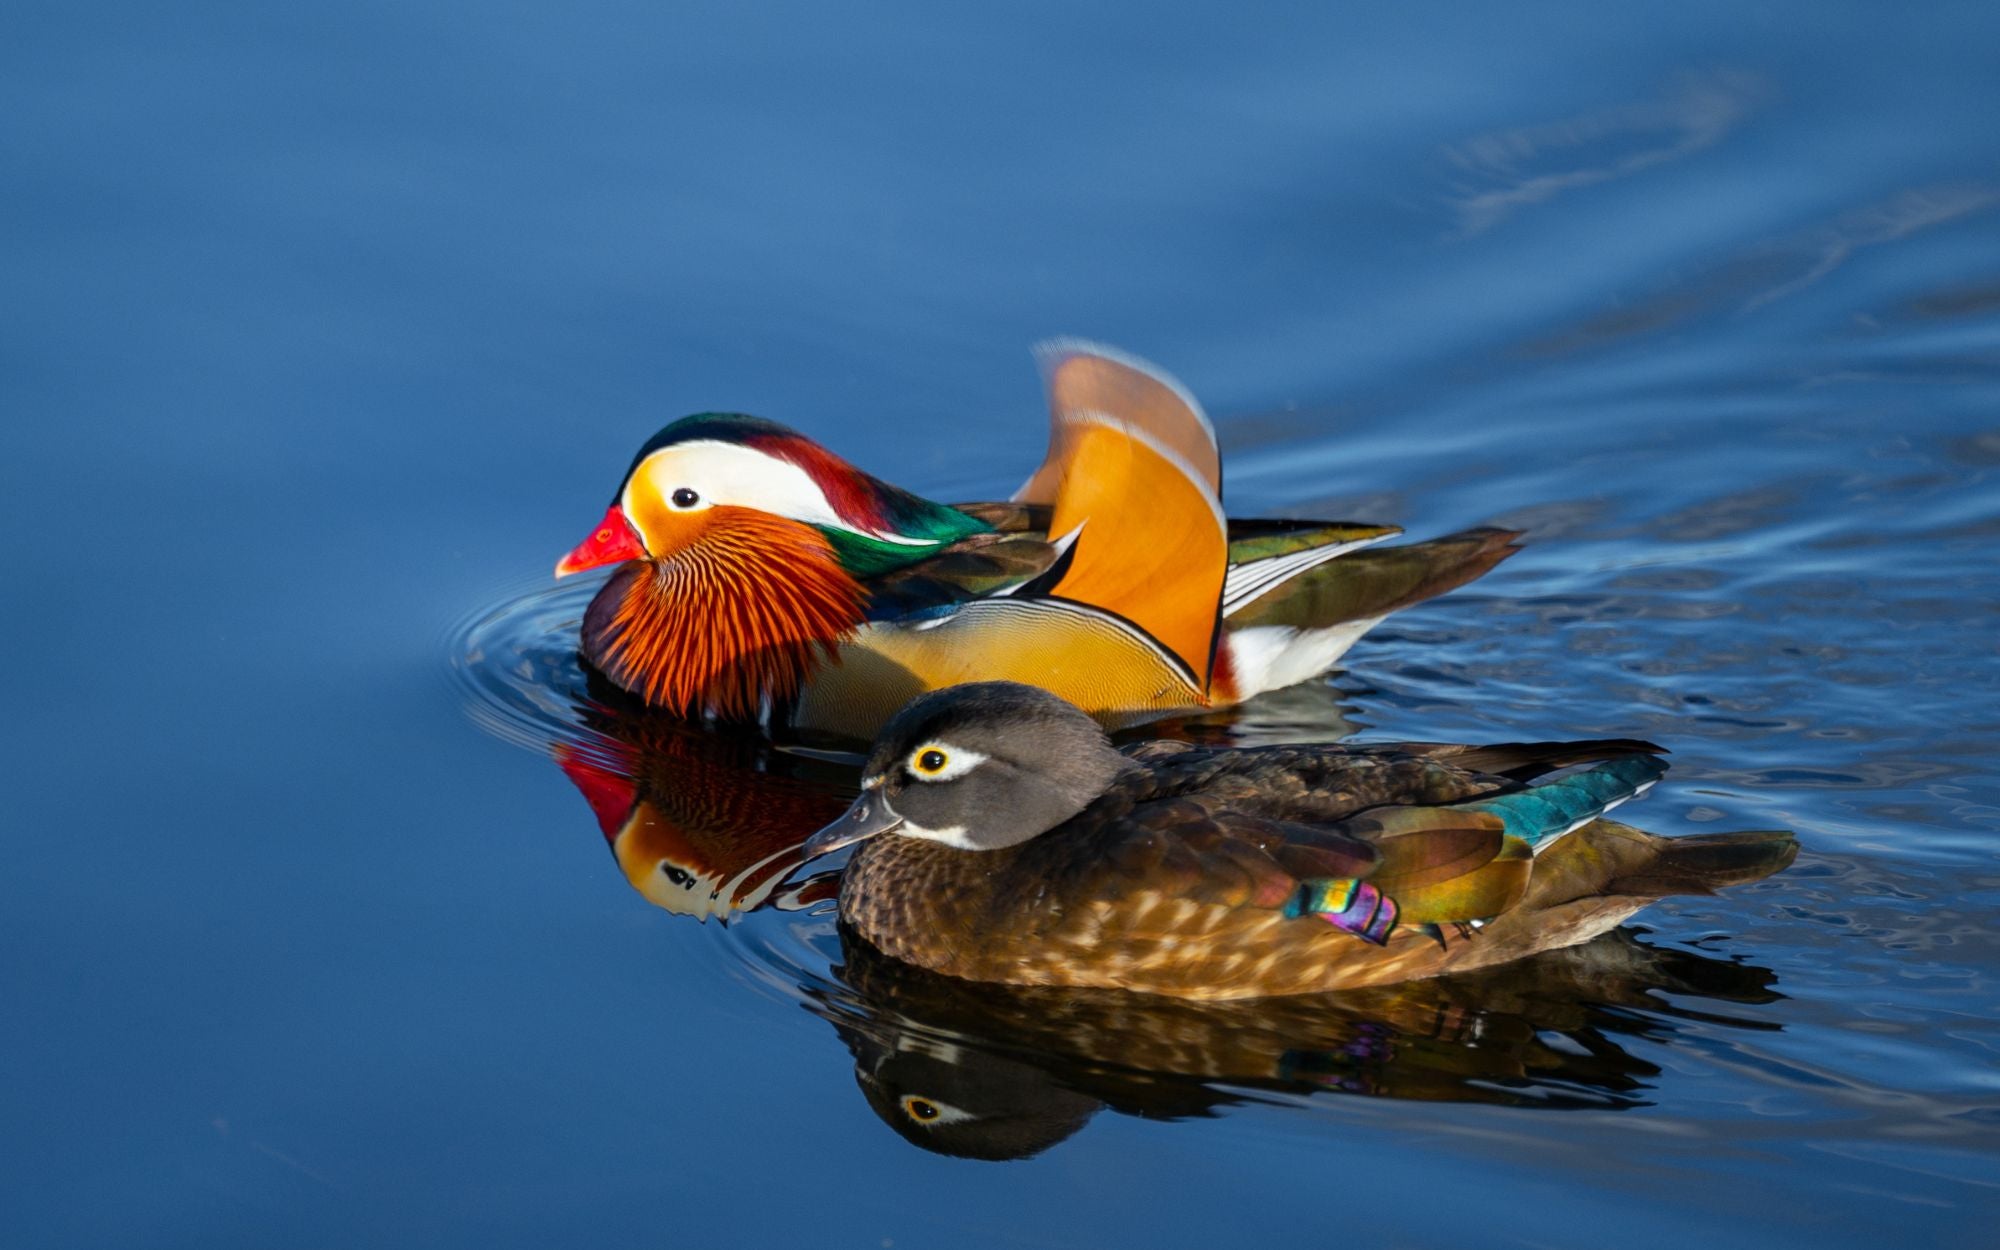 Mandarin Ducks - Feng Shui Symbols to Attract Love